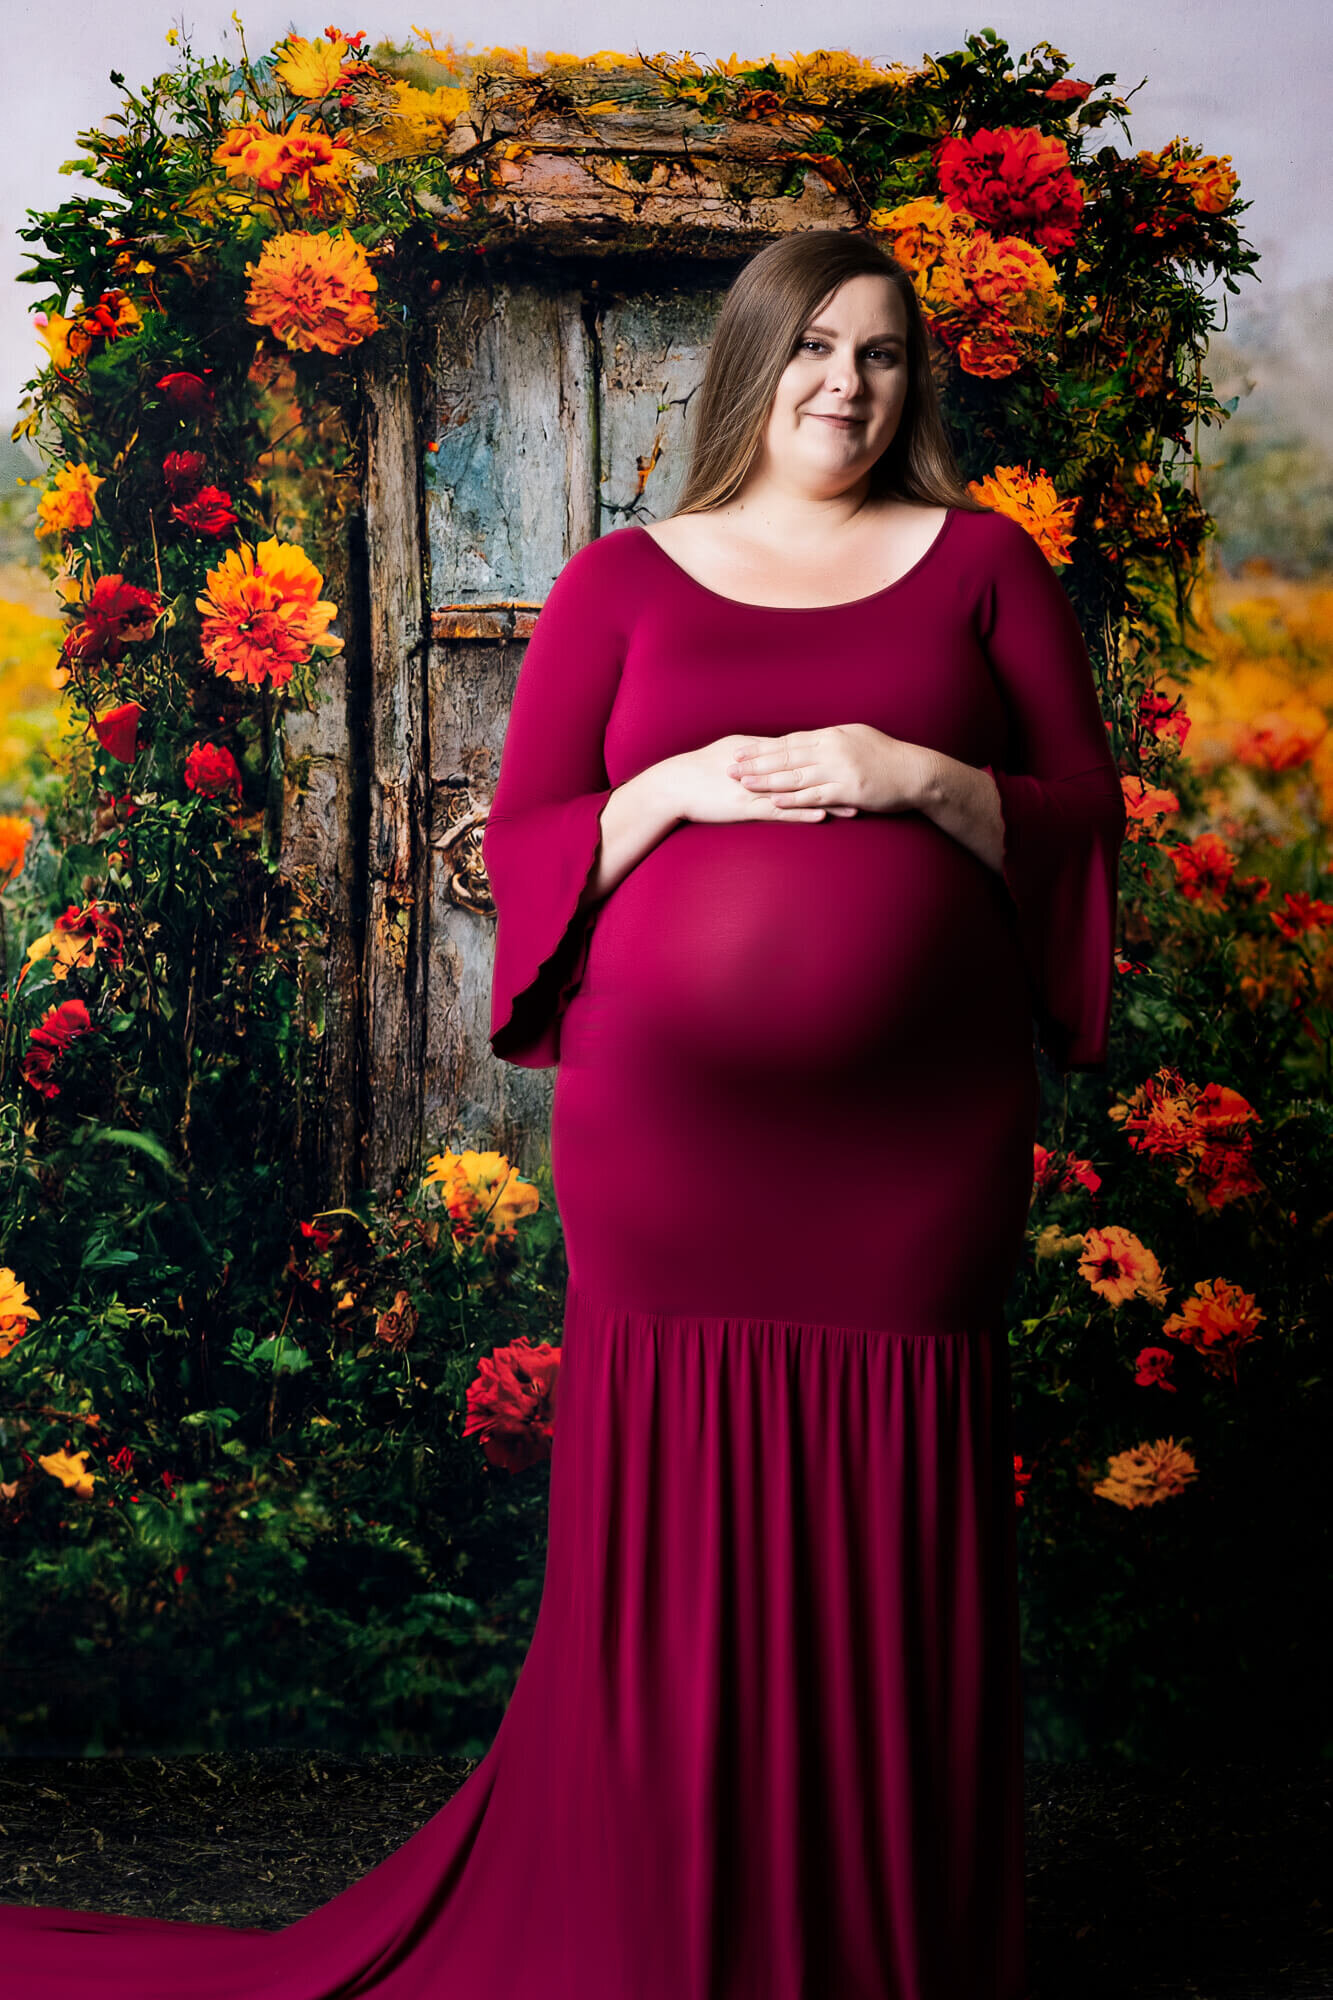 Fall themed Prescott AZ maternity photos by Melissa Byrne Photography